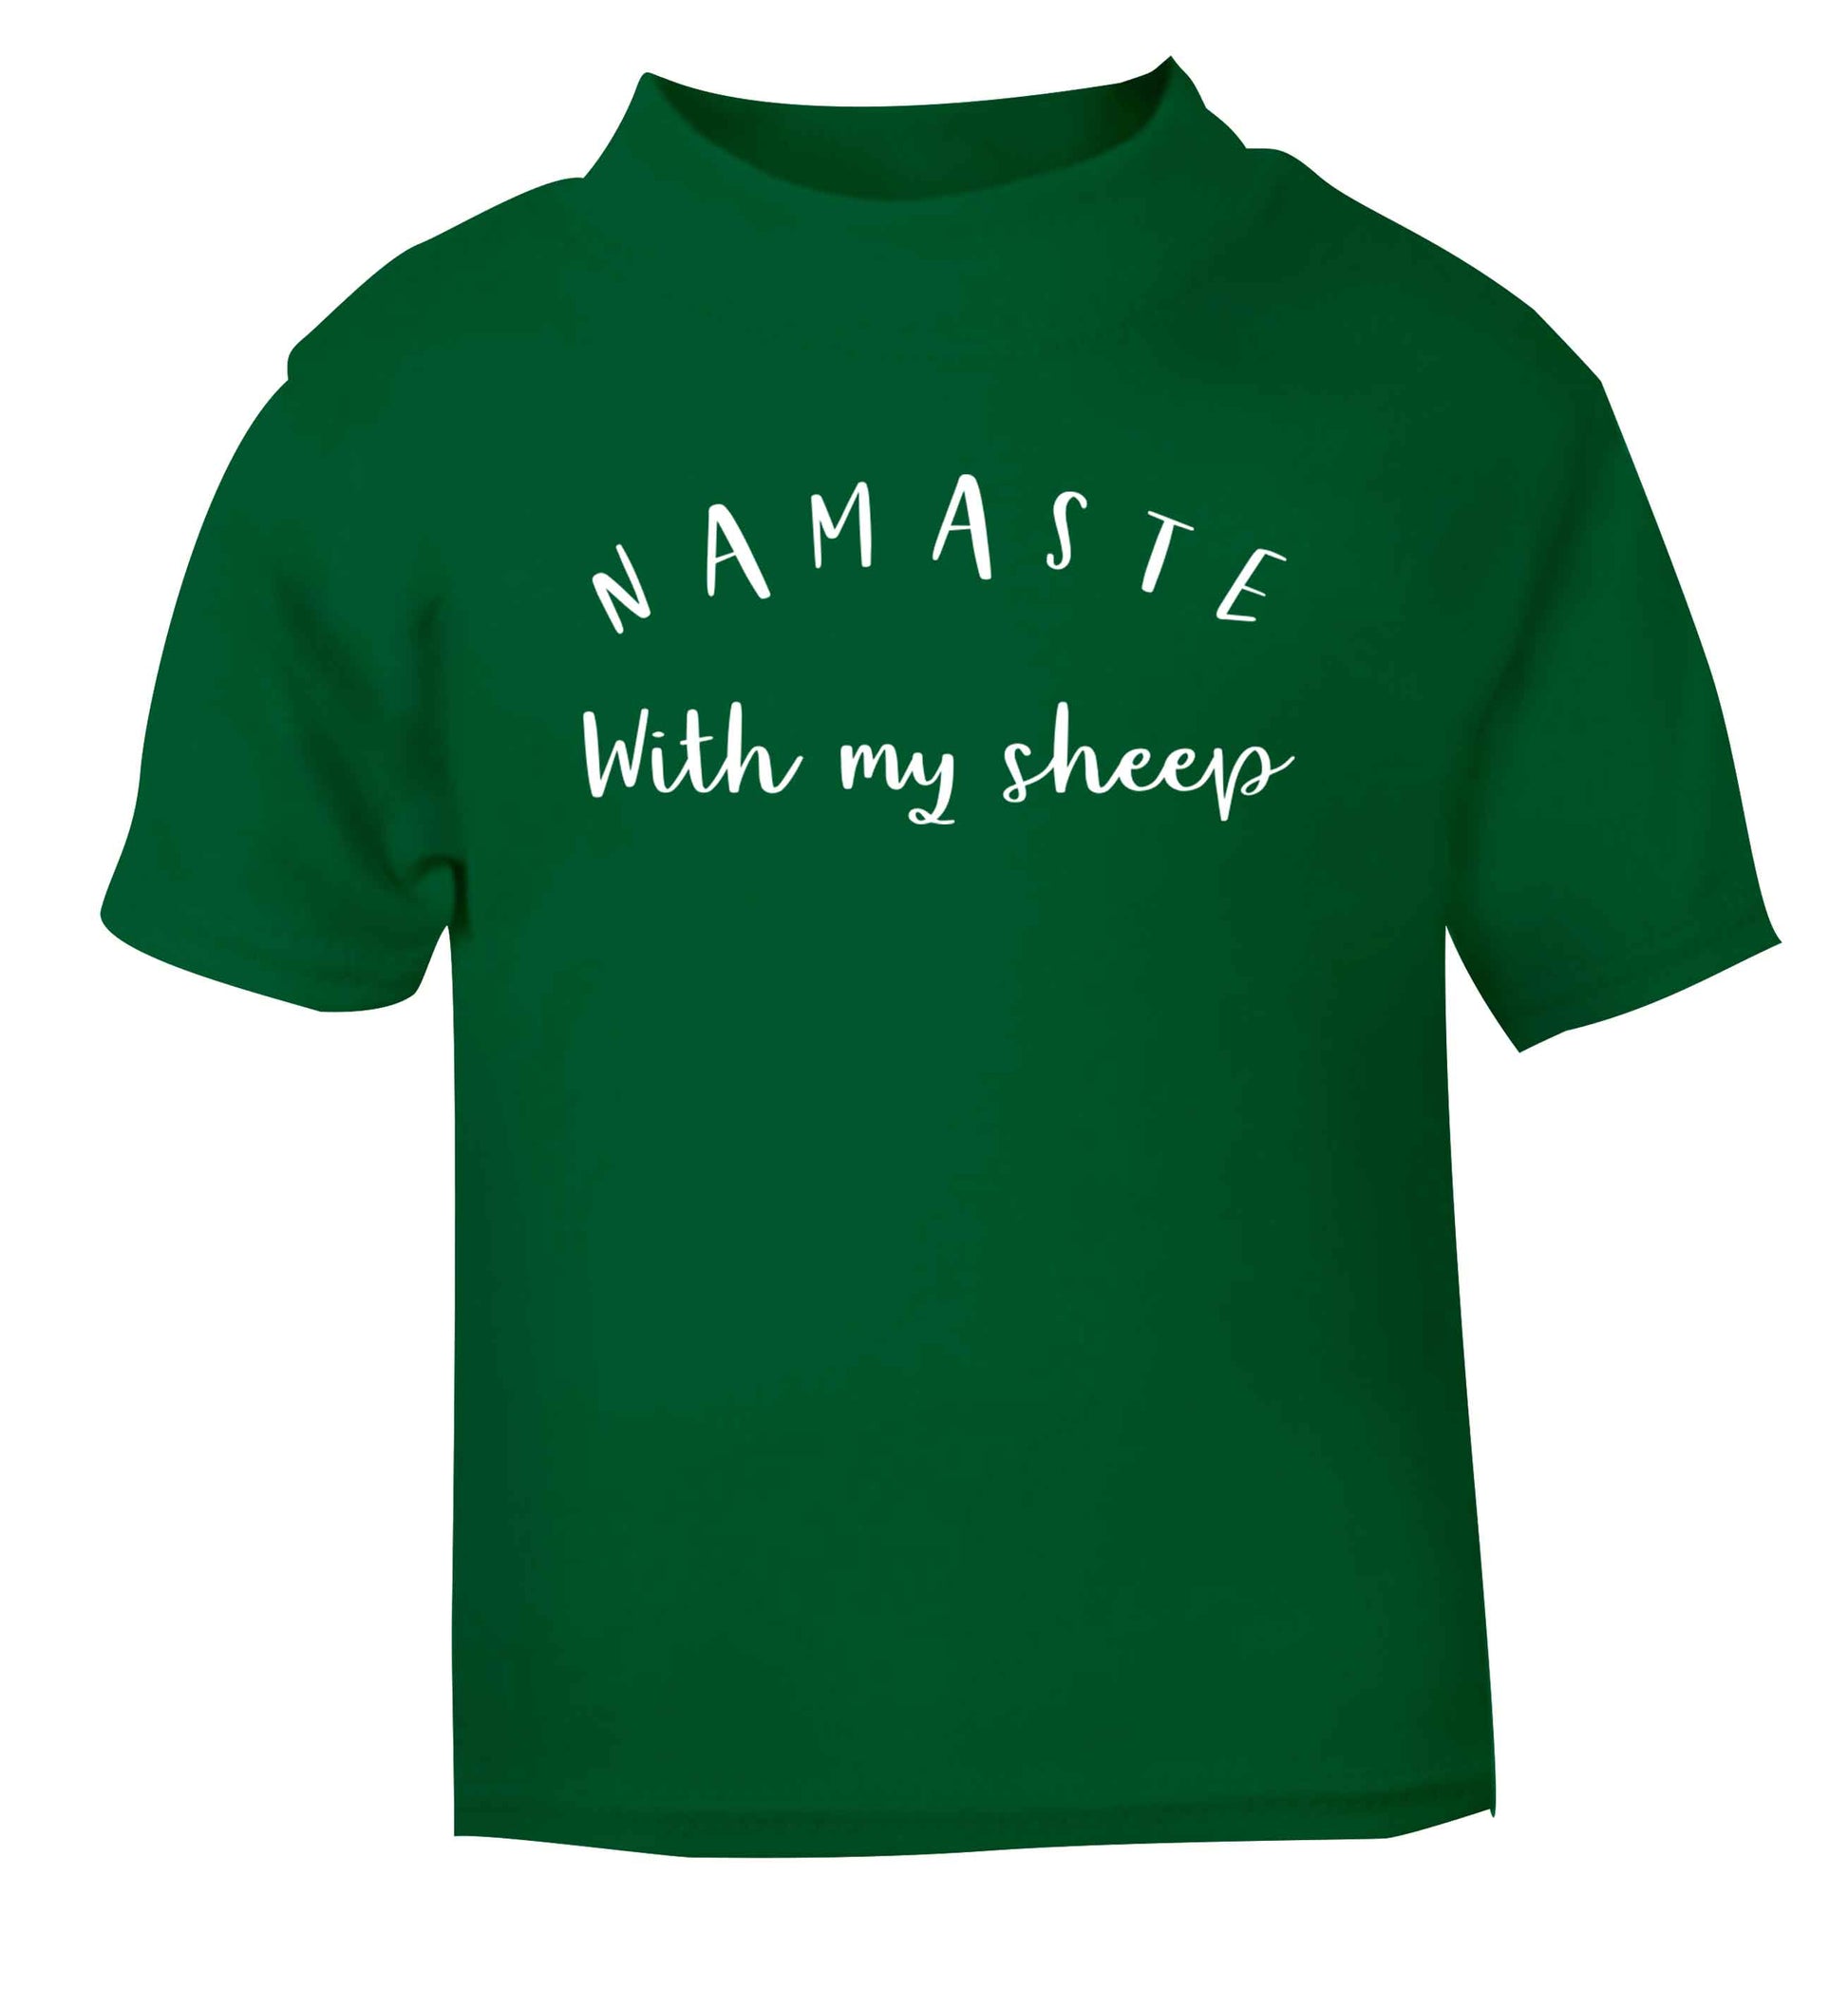 Namaste with my sheep green Baby Toddler Tshirt 2 Years